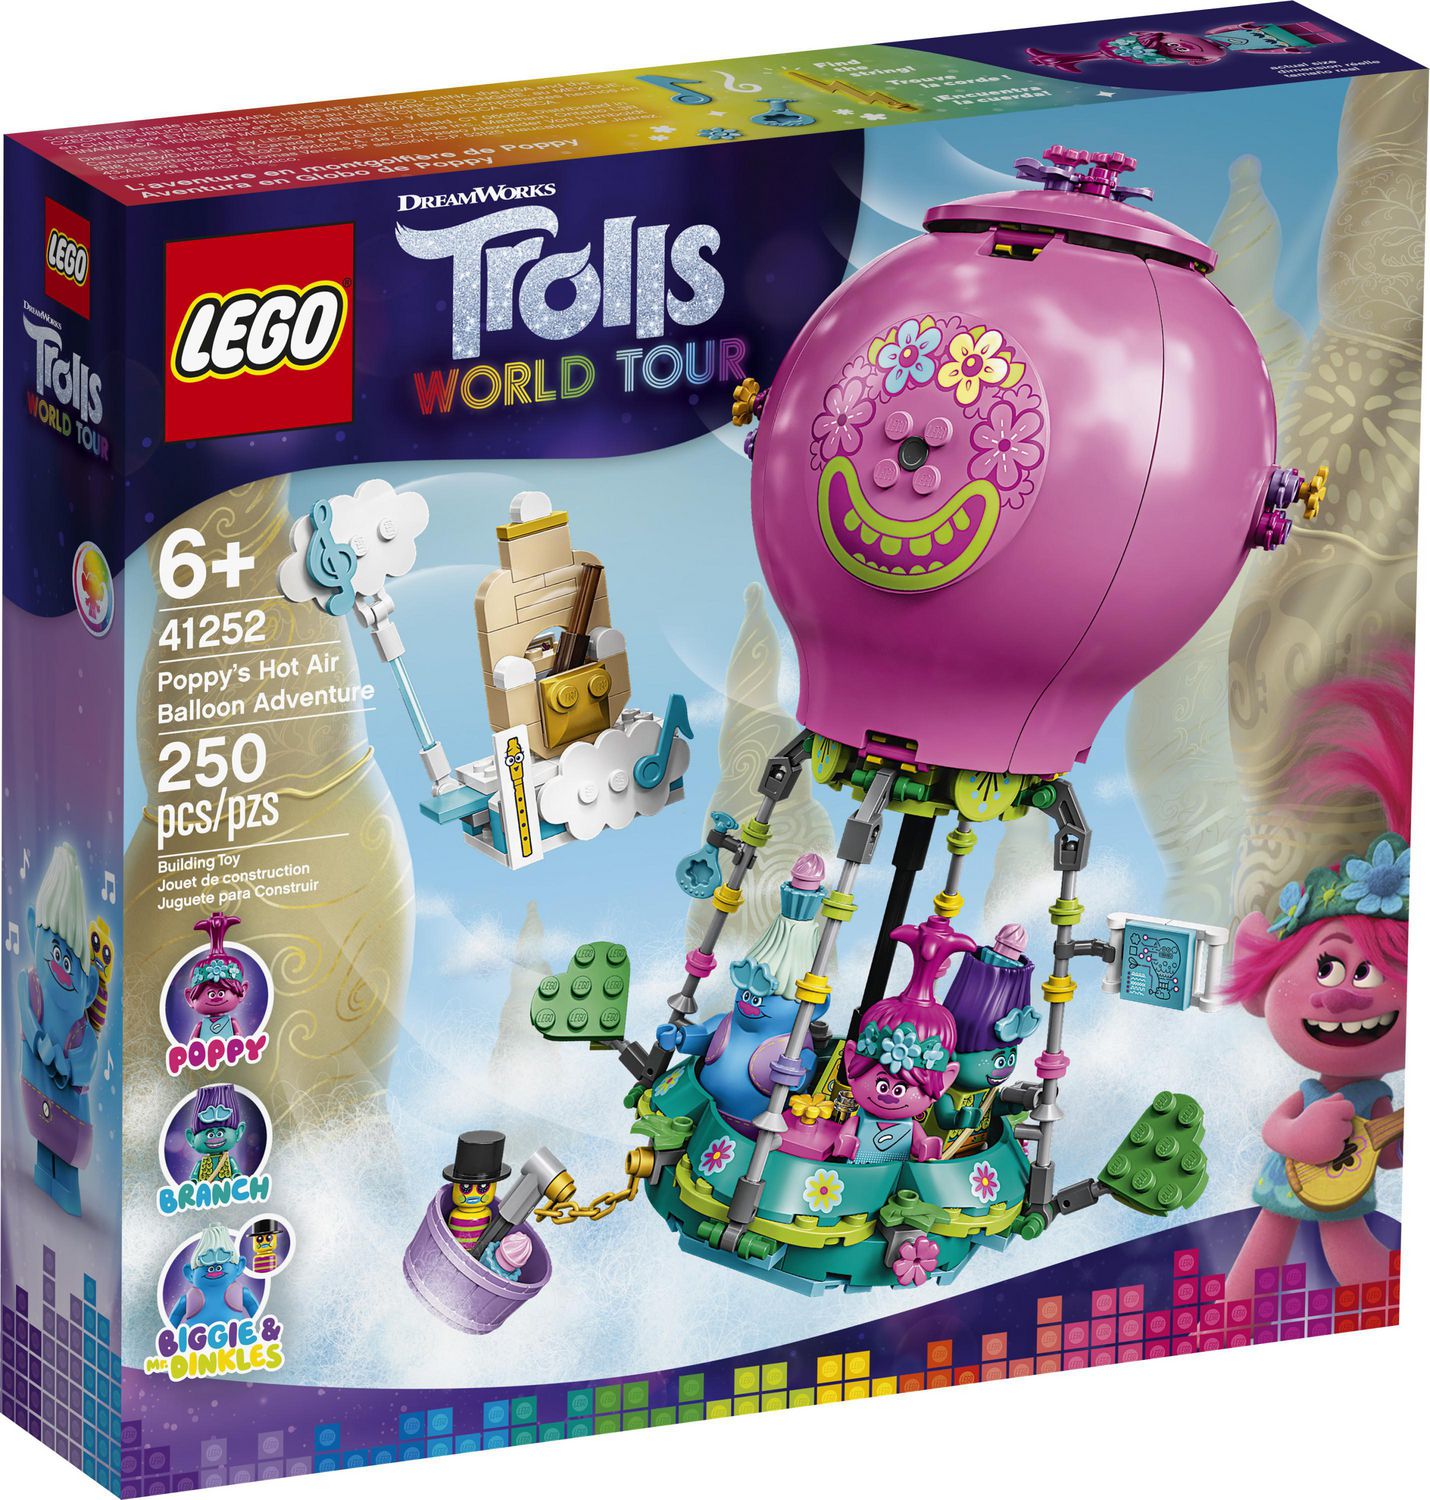 LEGO Trolls World Tour Poppy's Hot Air Balloon Adventure 41252 Toy